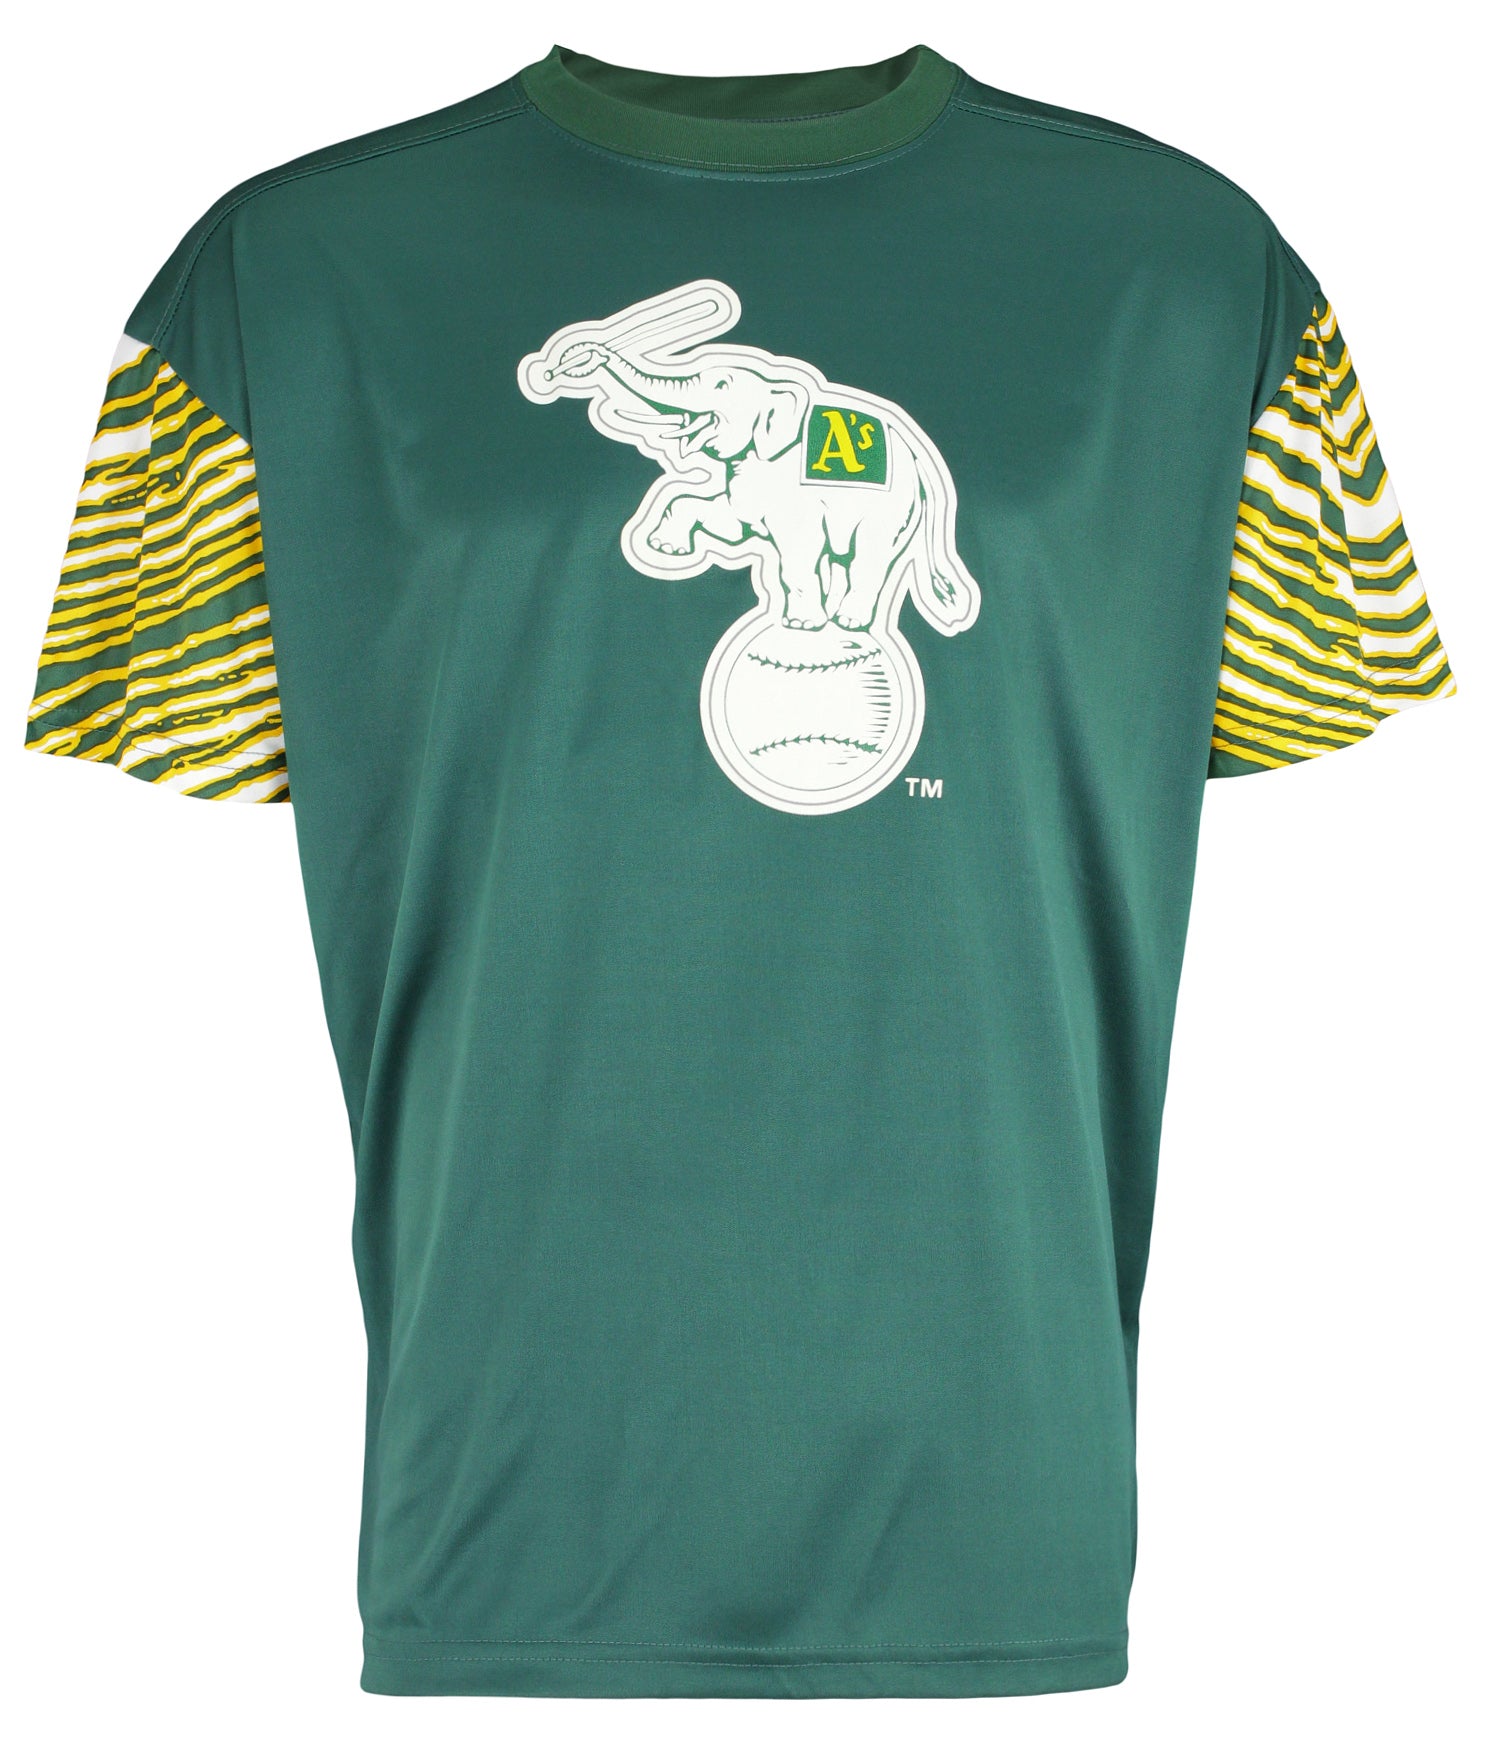 Vintage Oakland Athletics T-Shirt XLarge